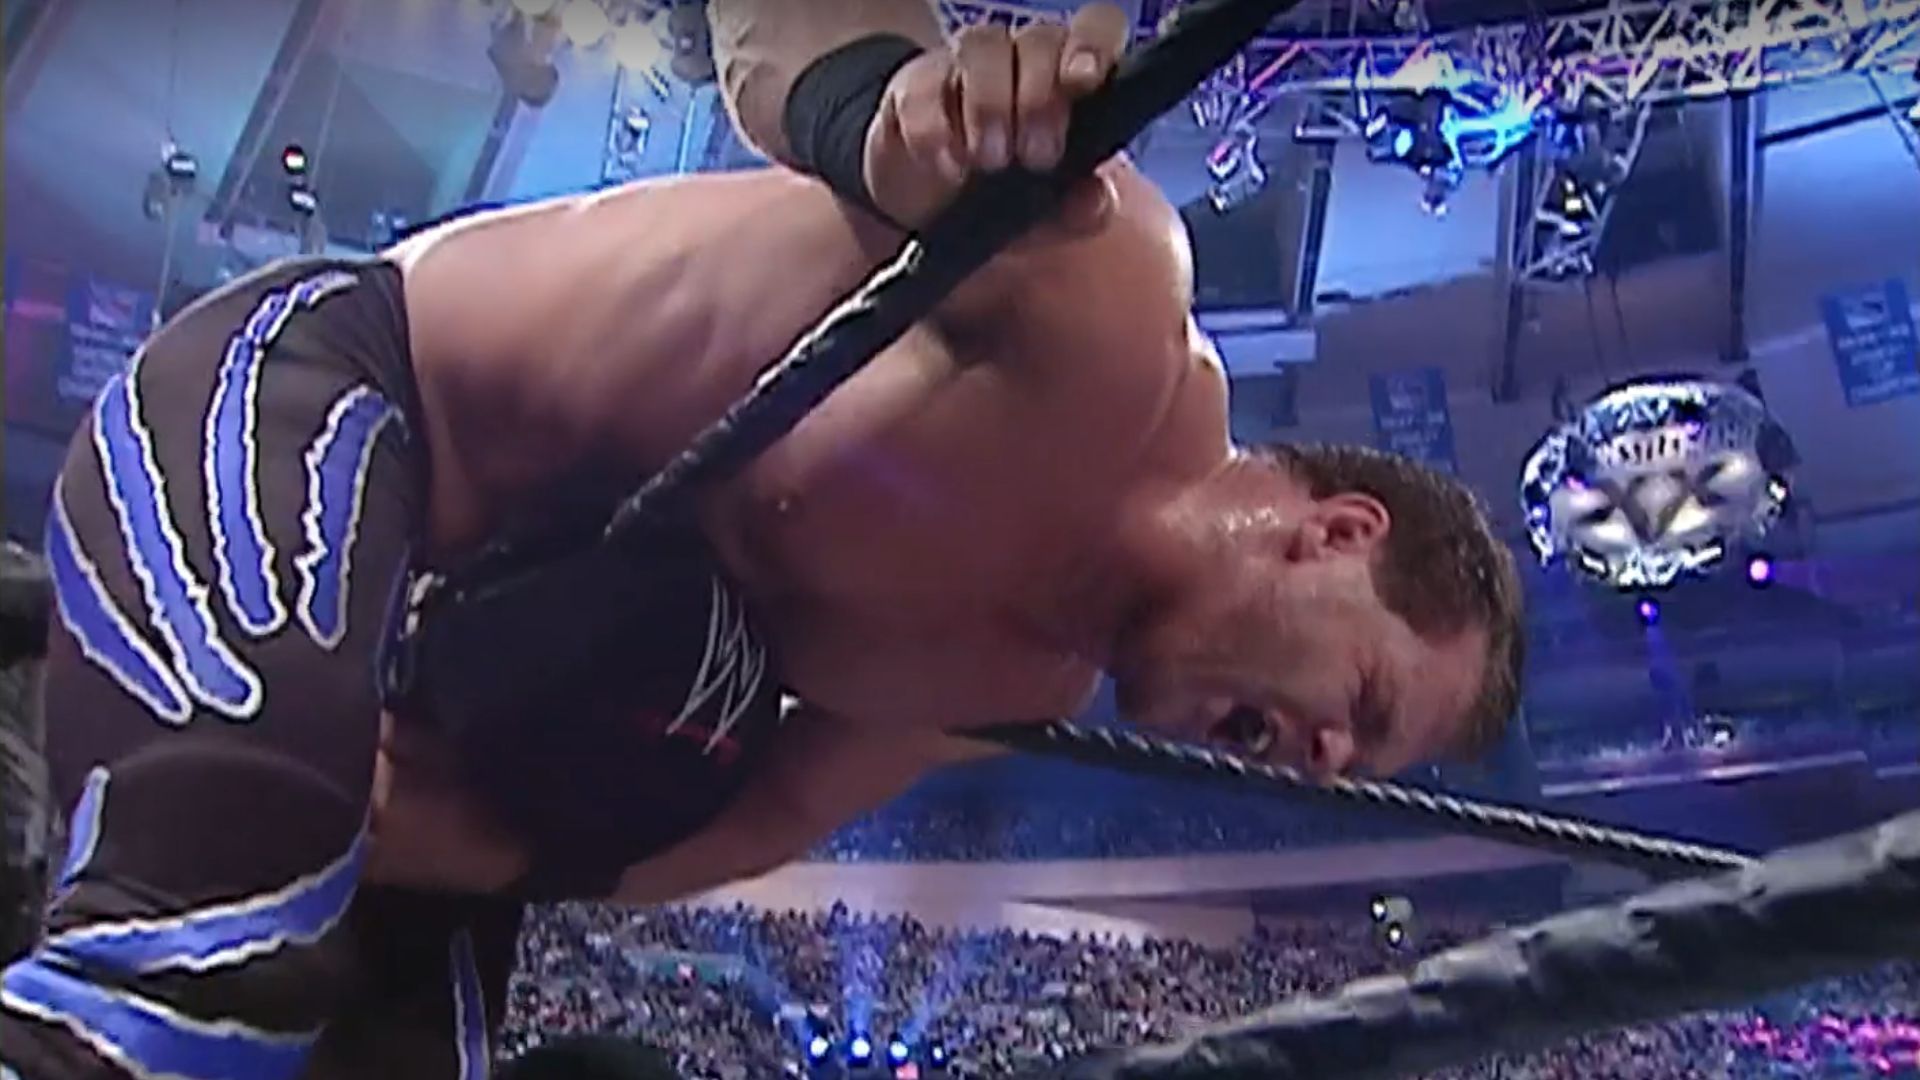 Chris Benoit has been a controversial figure in wrestling (Credit: WWE WrestleMania)